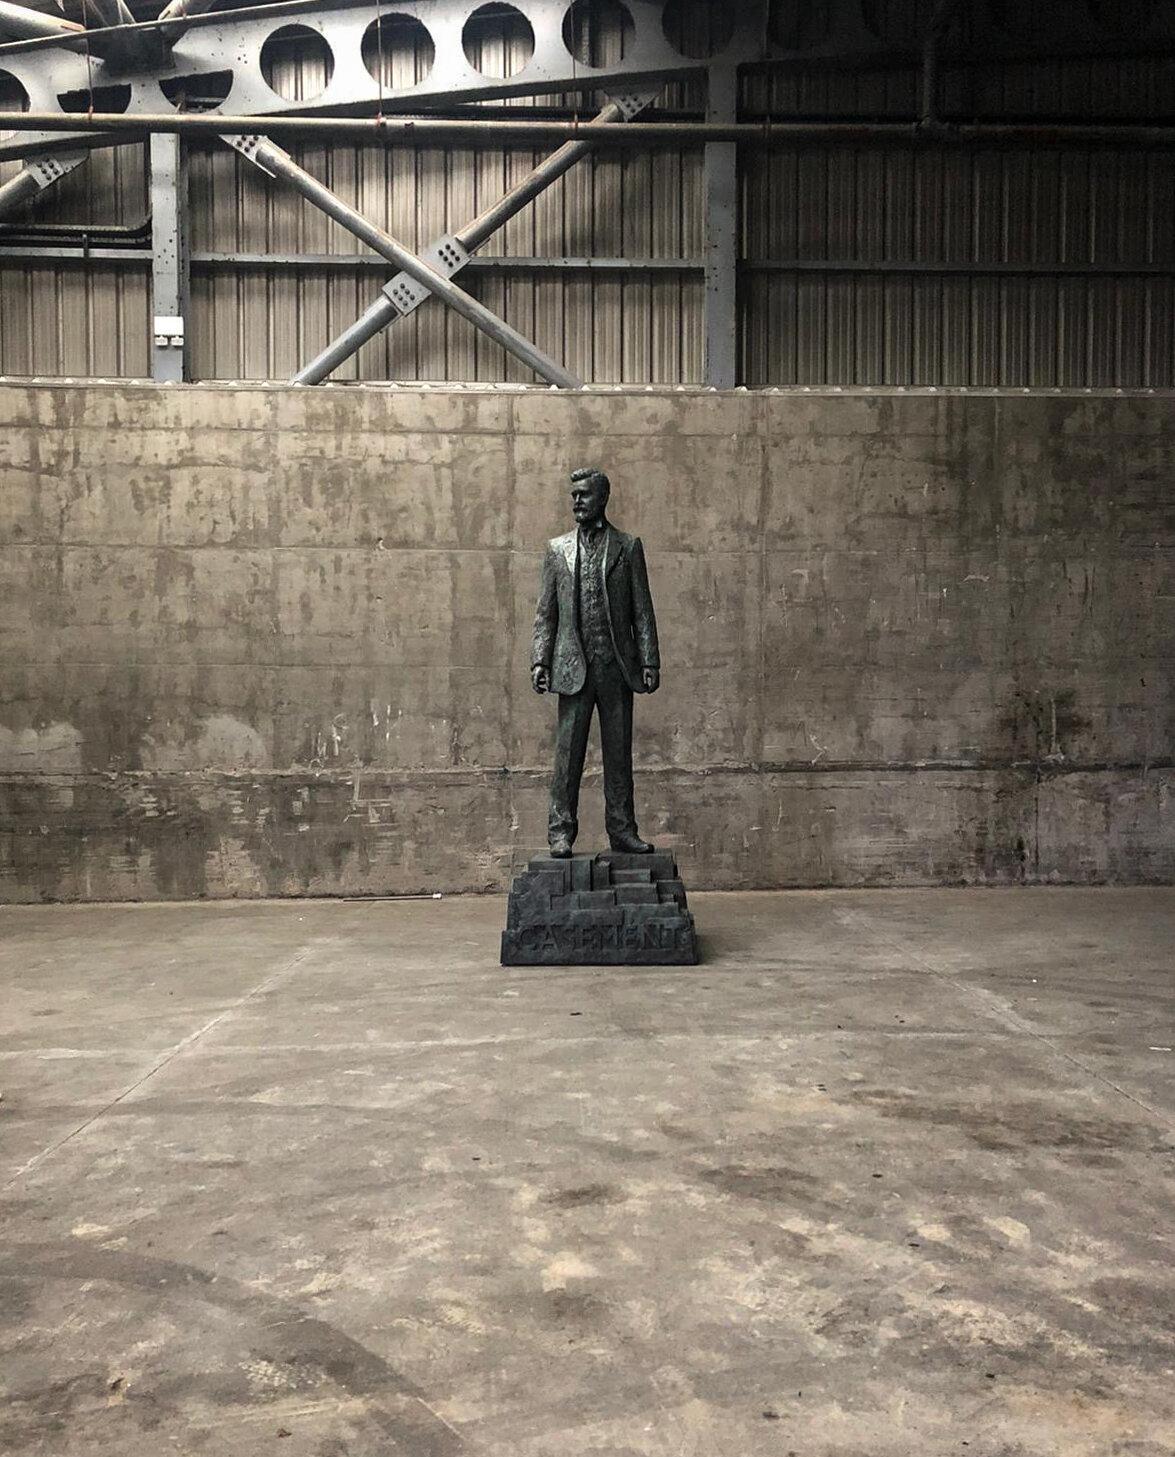 The Roger Casement sculpture in Dún Laoghaire storage area